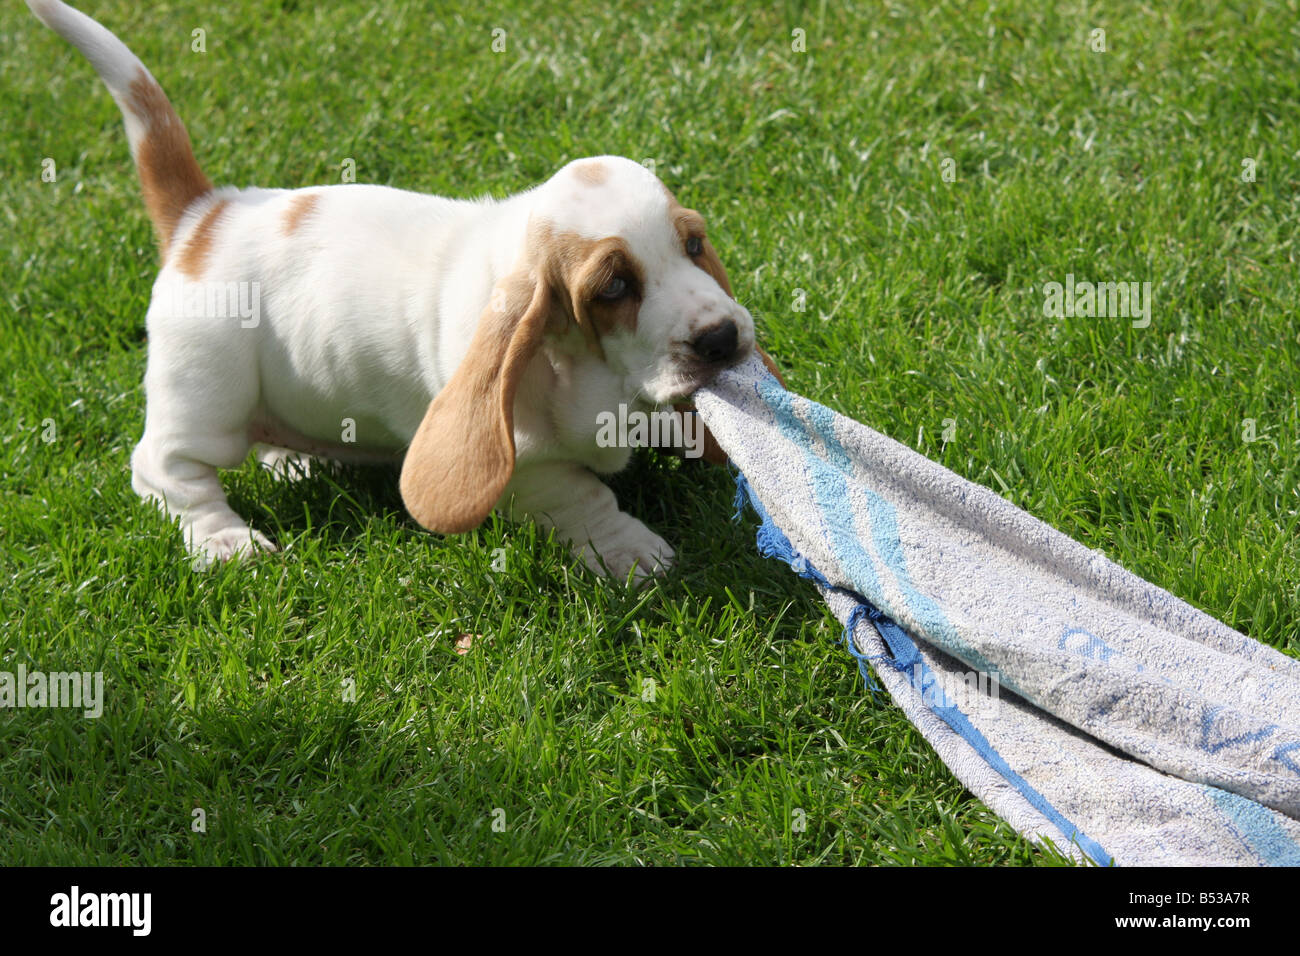 Basset hound puppy tugging towel Stock Photo